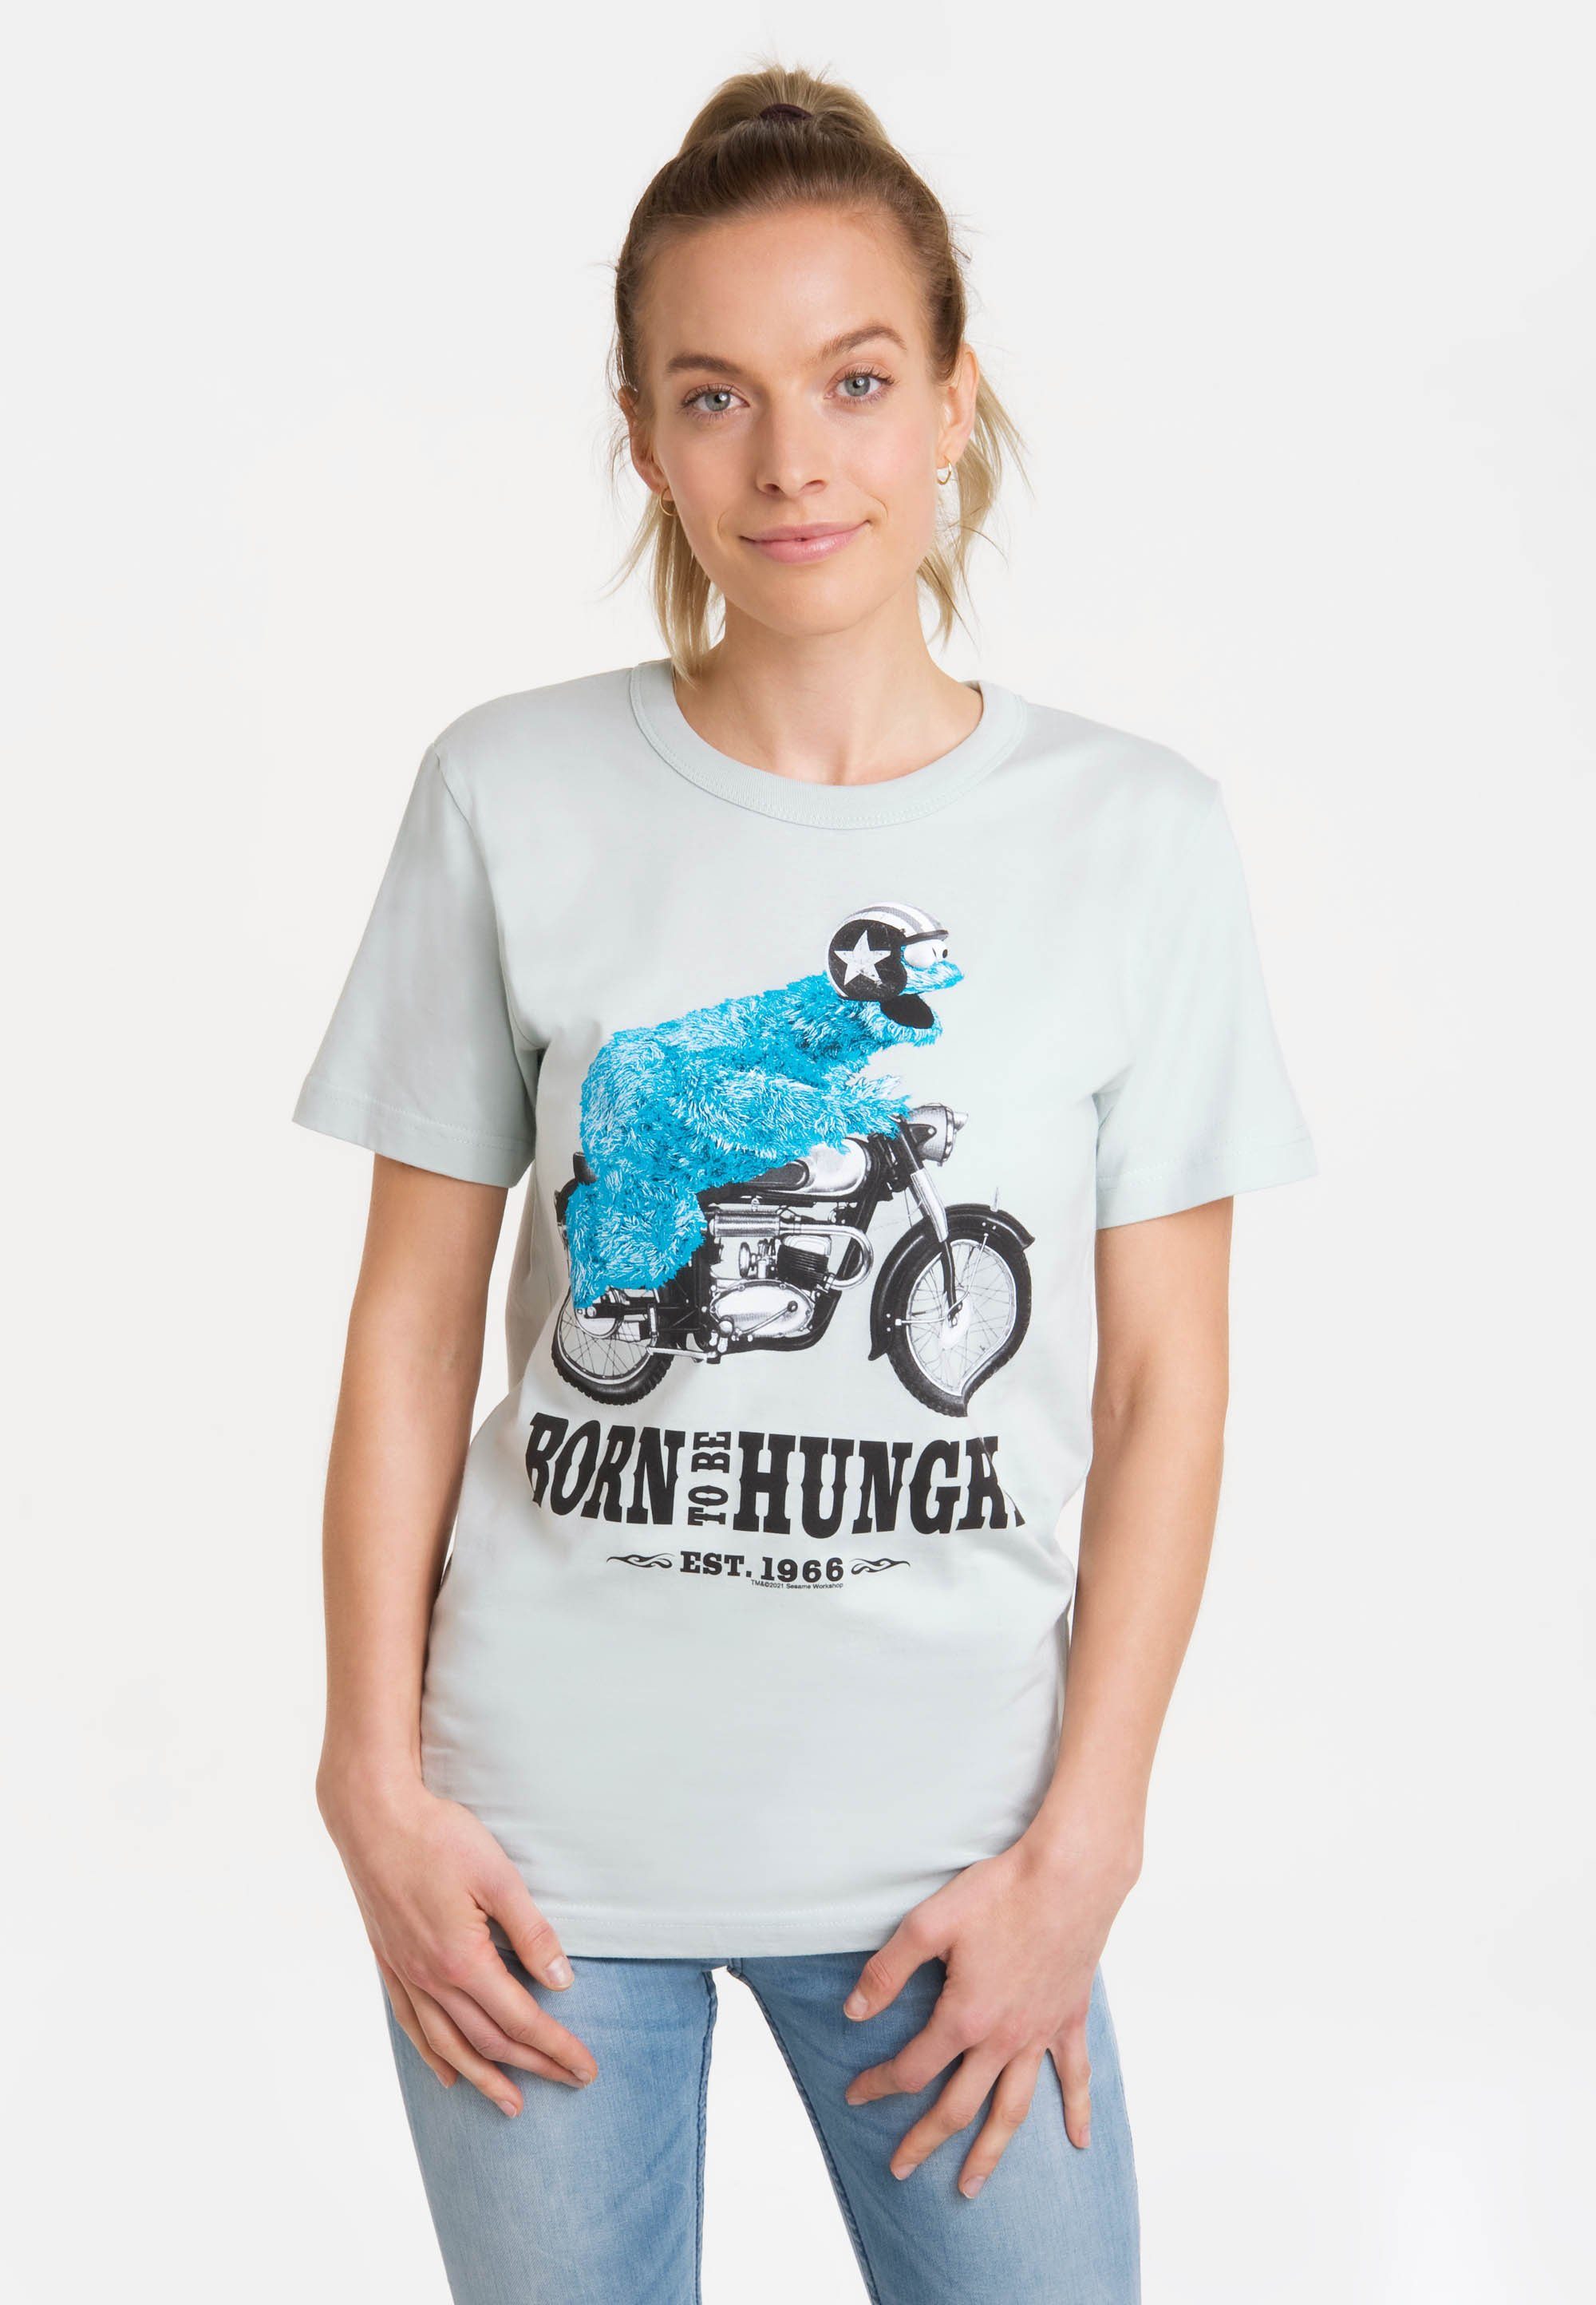 Witziges - T-Shirt Front Sesamstrasse Highlight LOGOSHIRT der Motorrad Print, lizenziertem mit als Krümelmonster-Motiv Krümelmonster auf